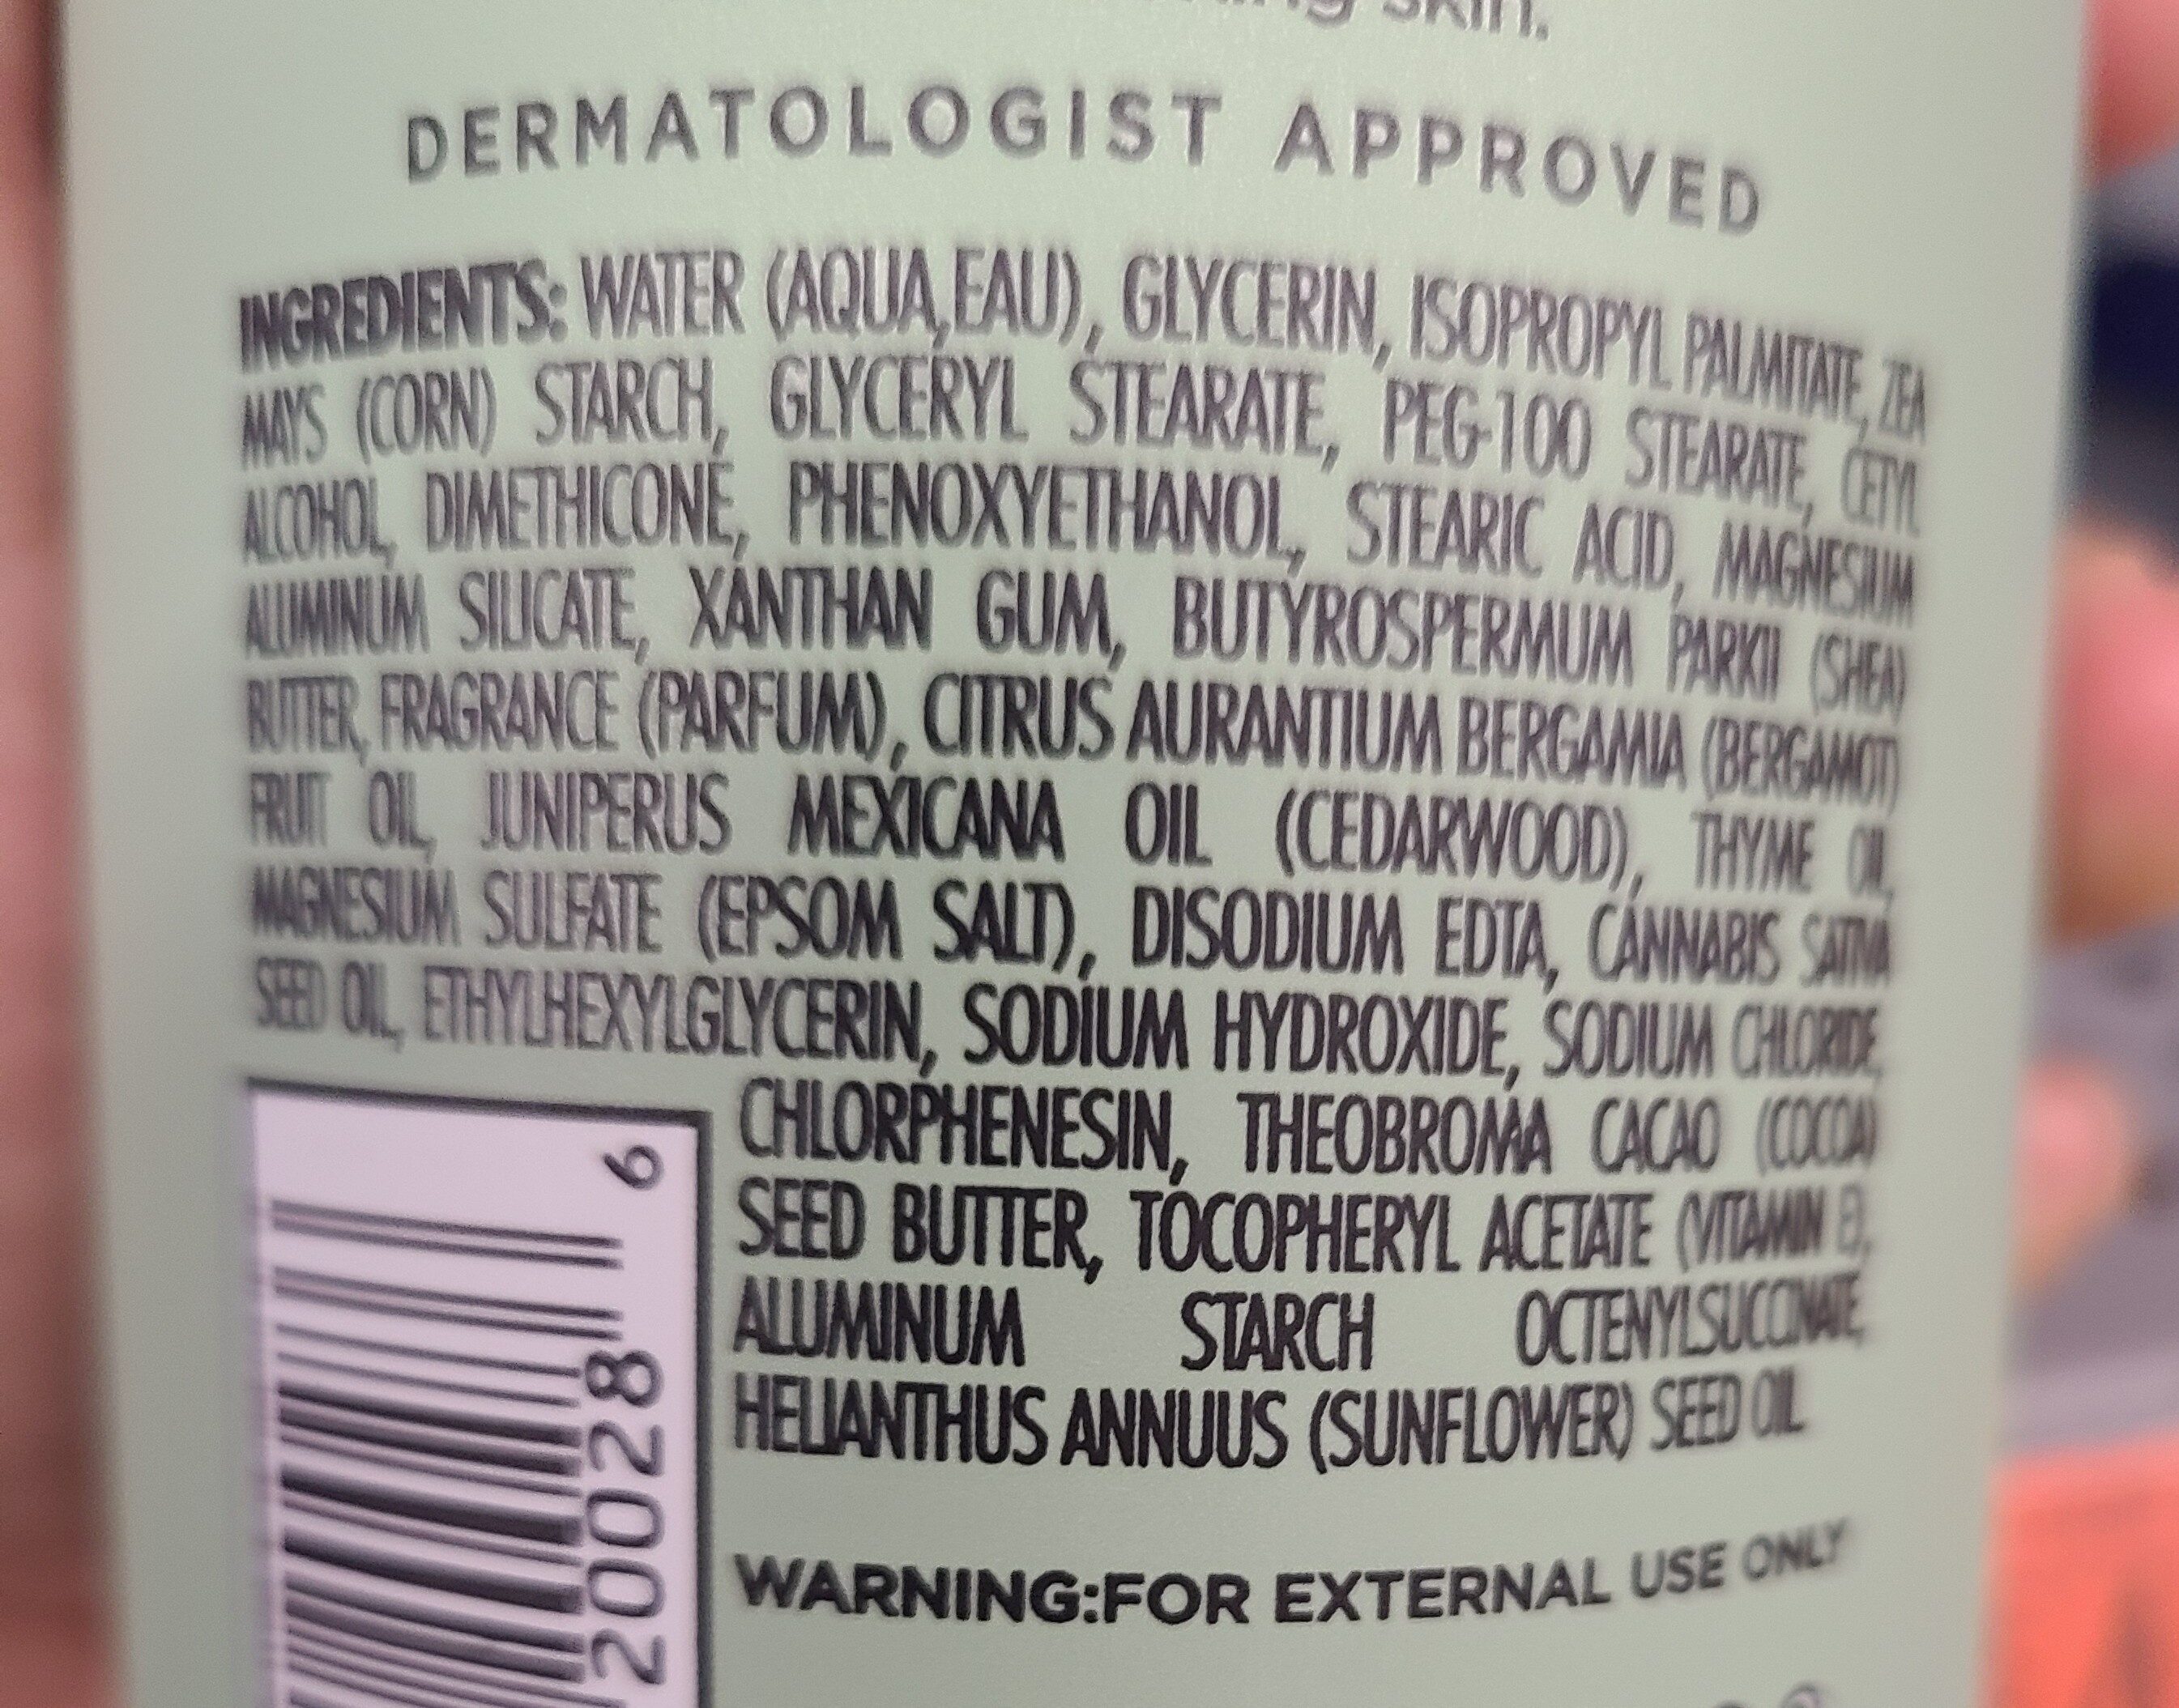 Dr reals hemp body lotion - Ingredients - en